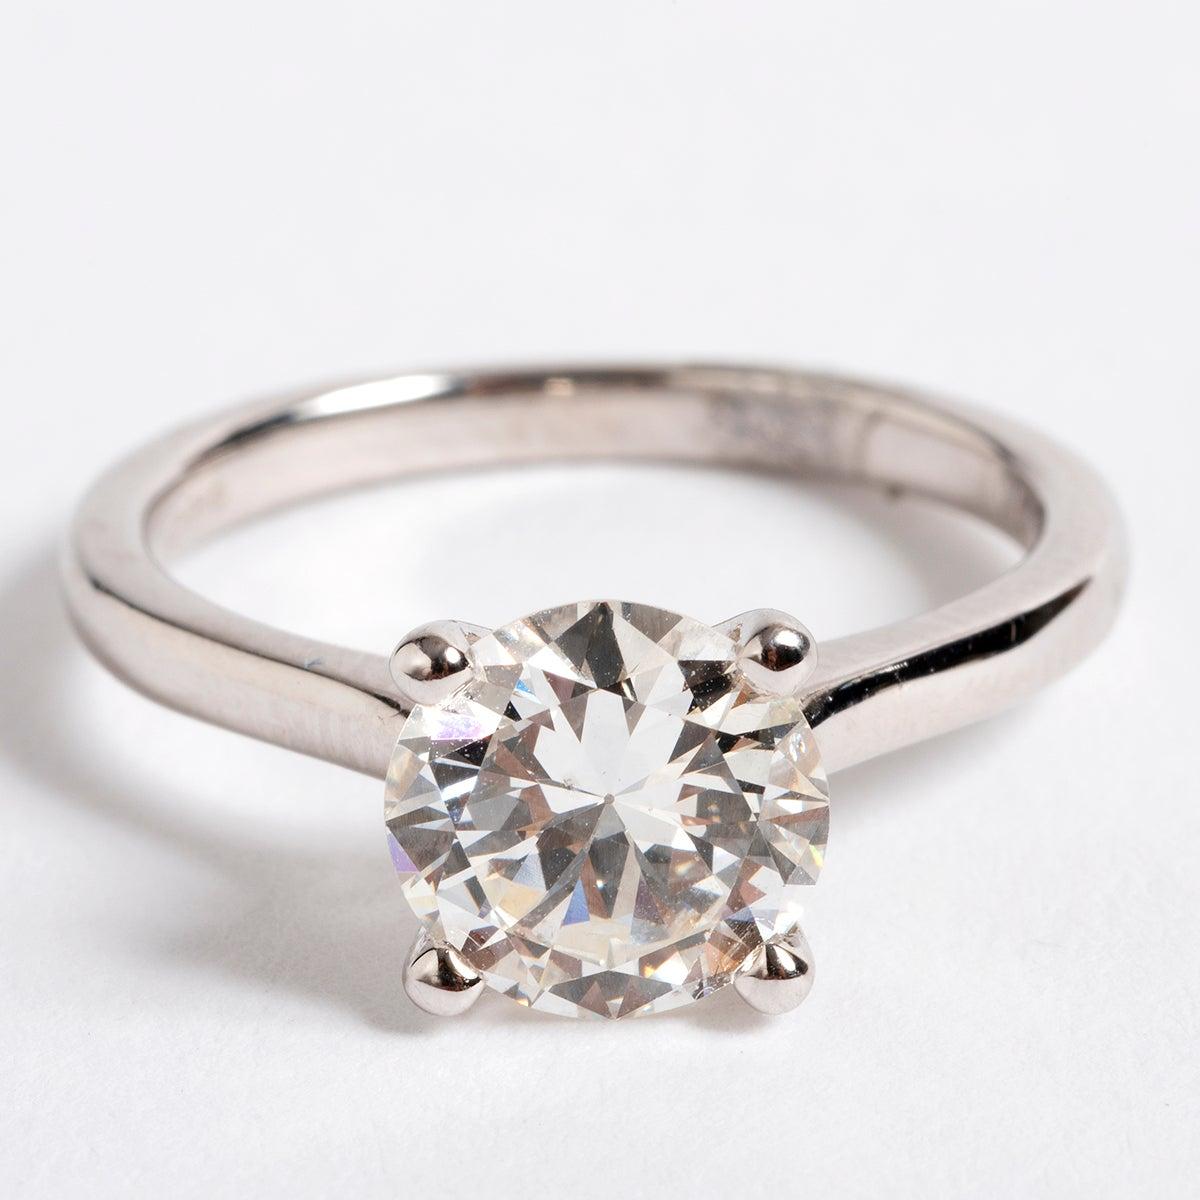 1.6carat diamond ring